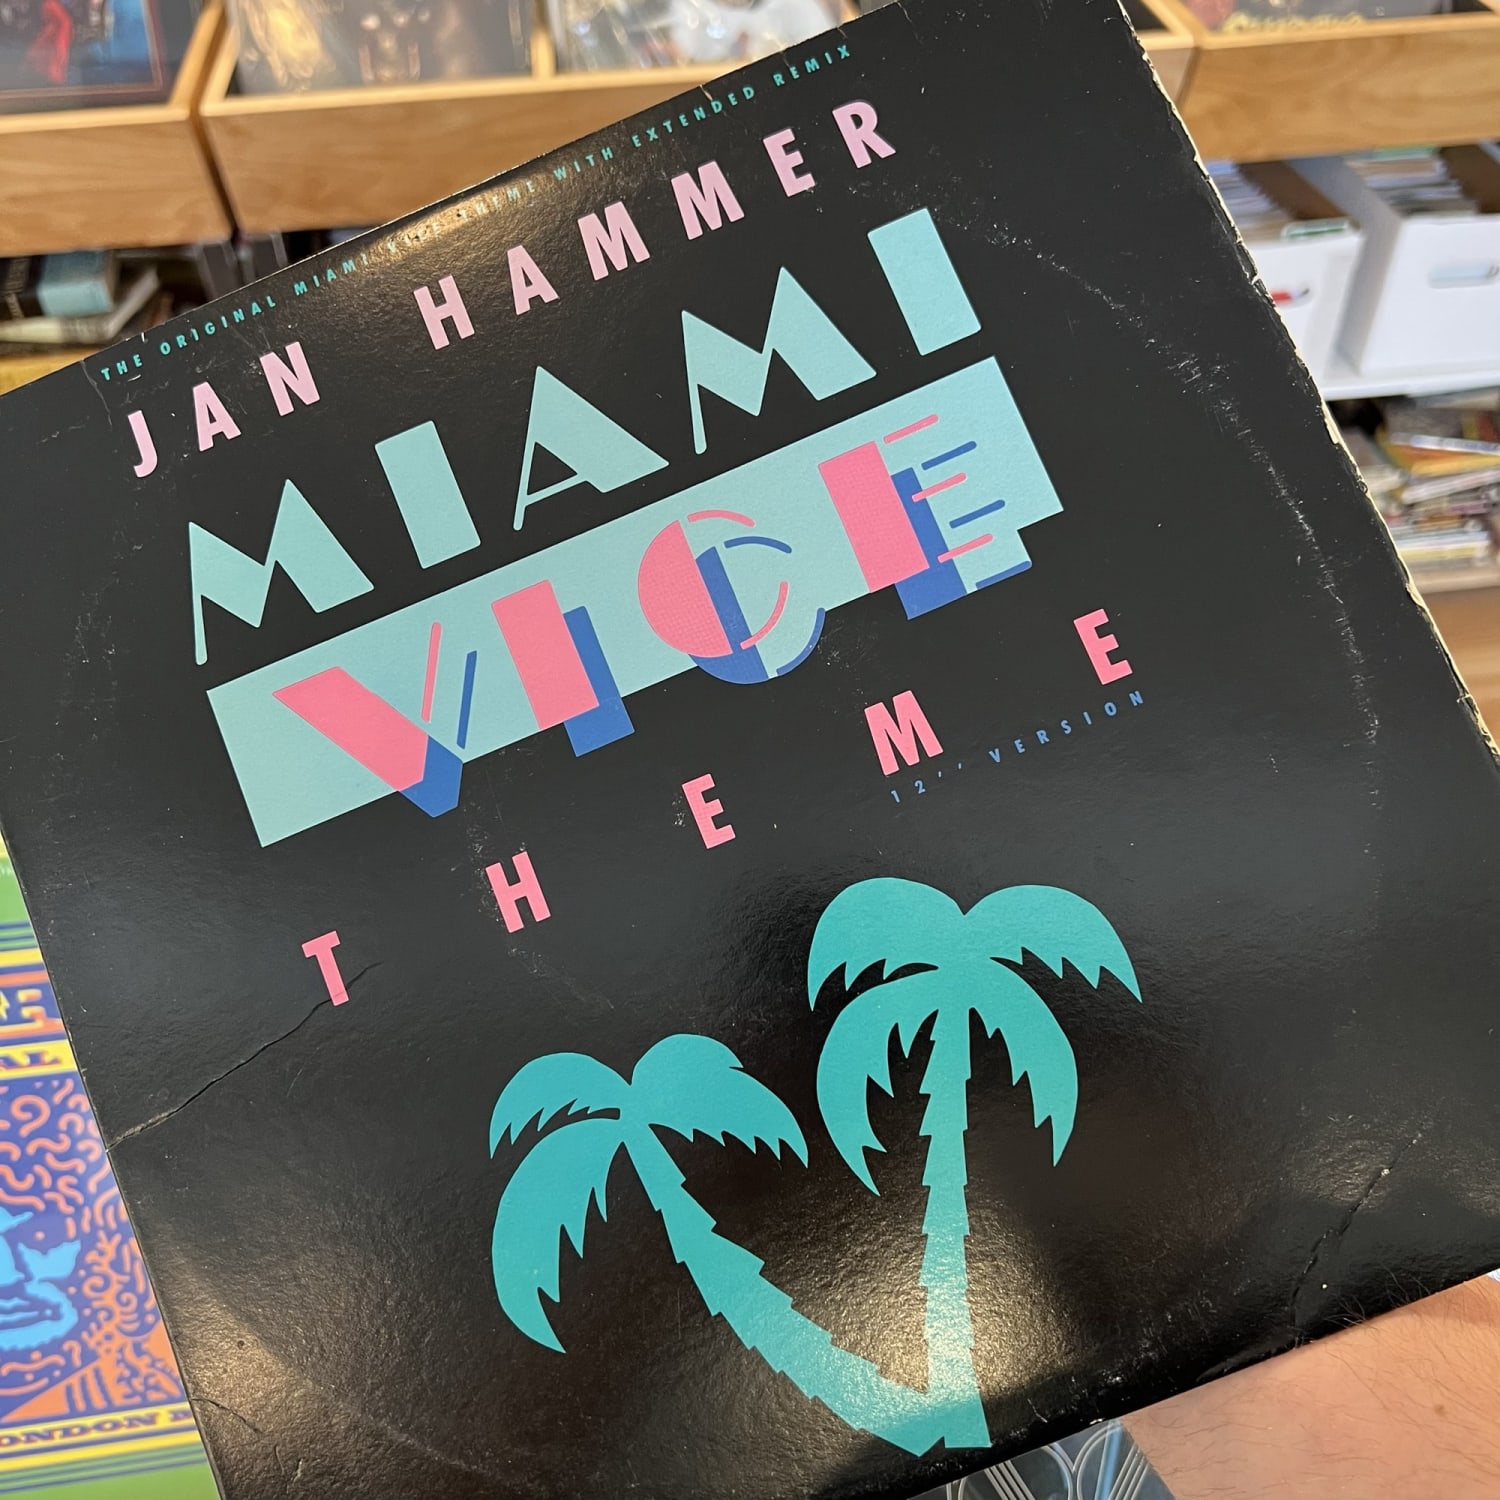 Miami Vice Theme - Jan Hammer, Vinyl, 1985